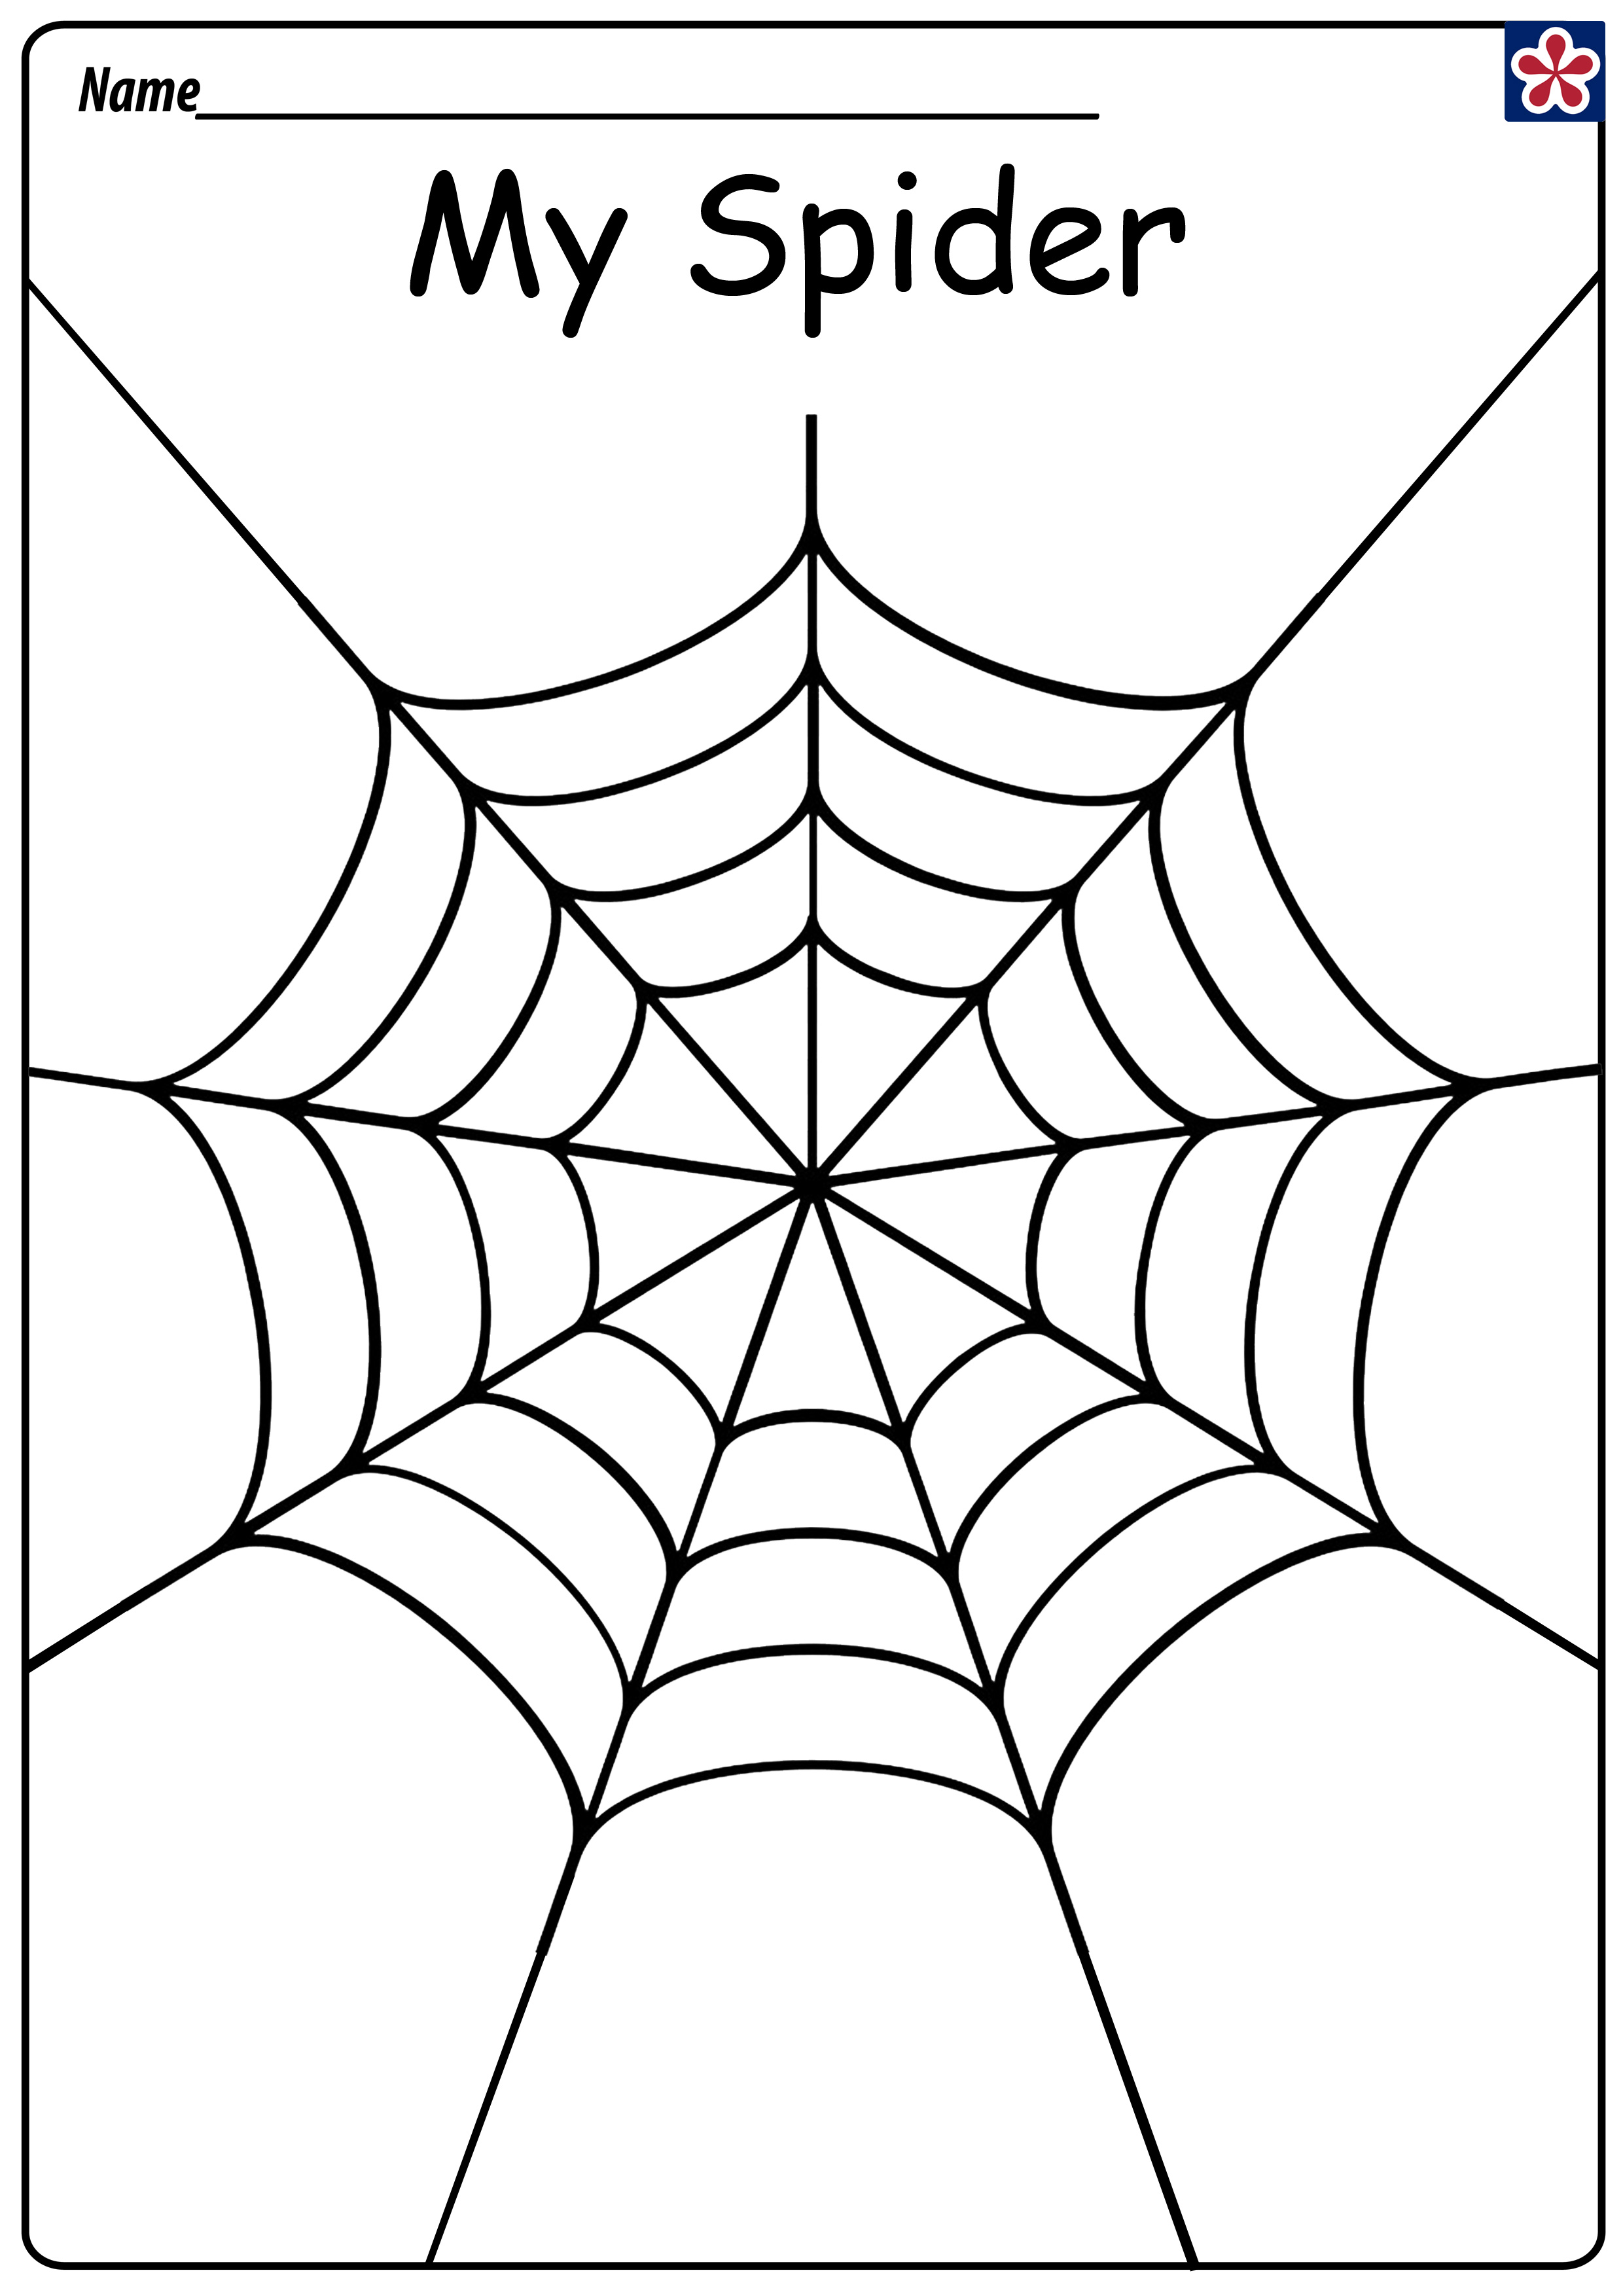 10 Simple Spider Crafts for Preschoolers.